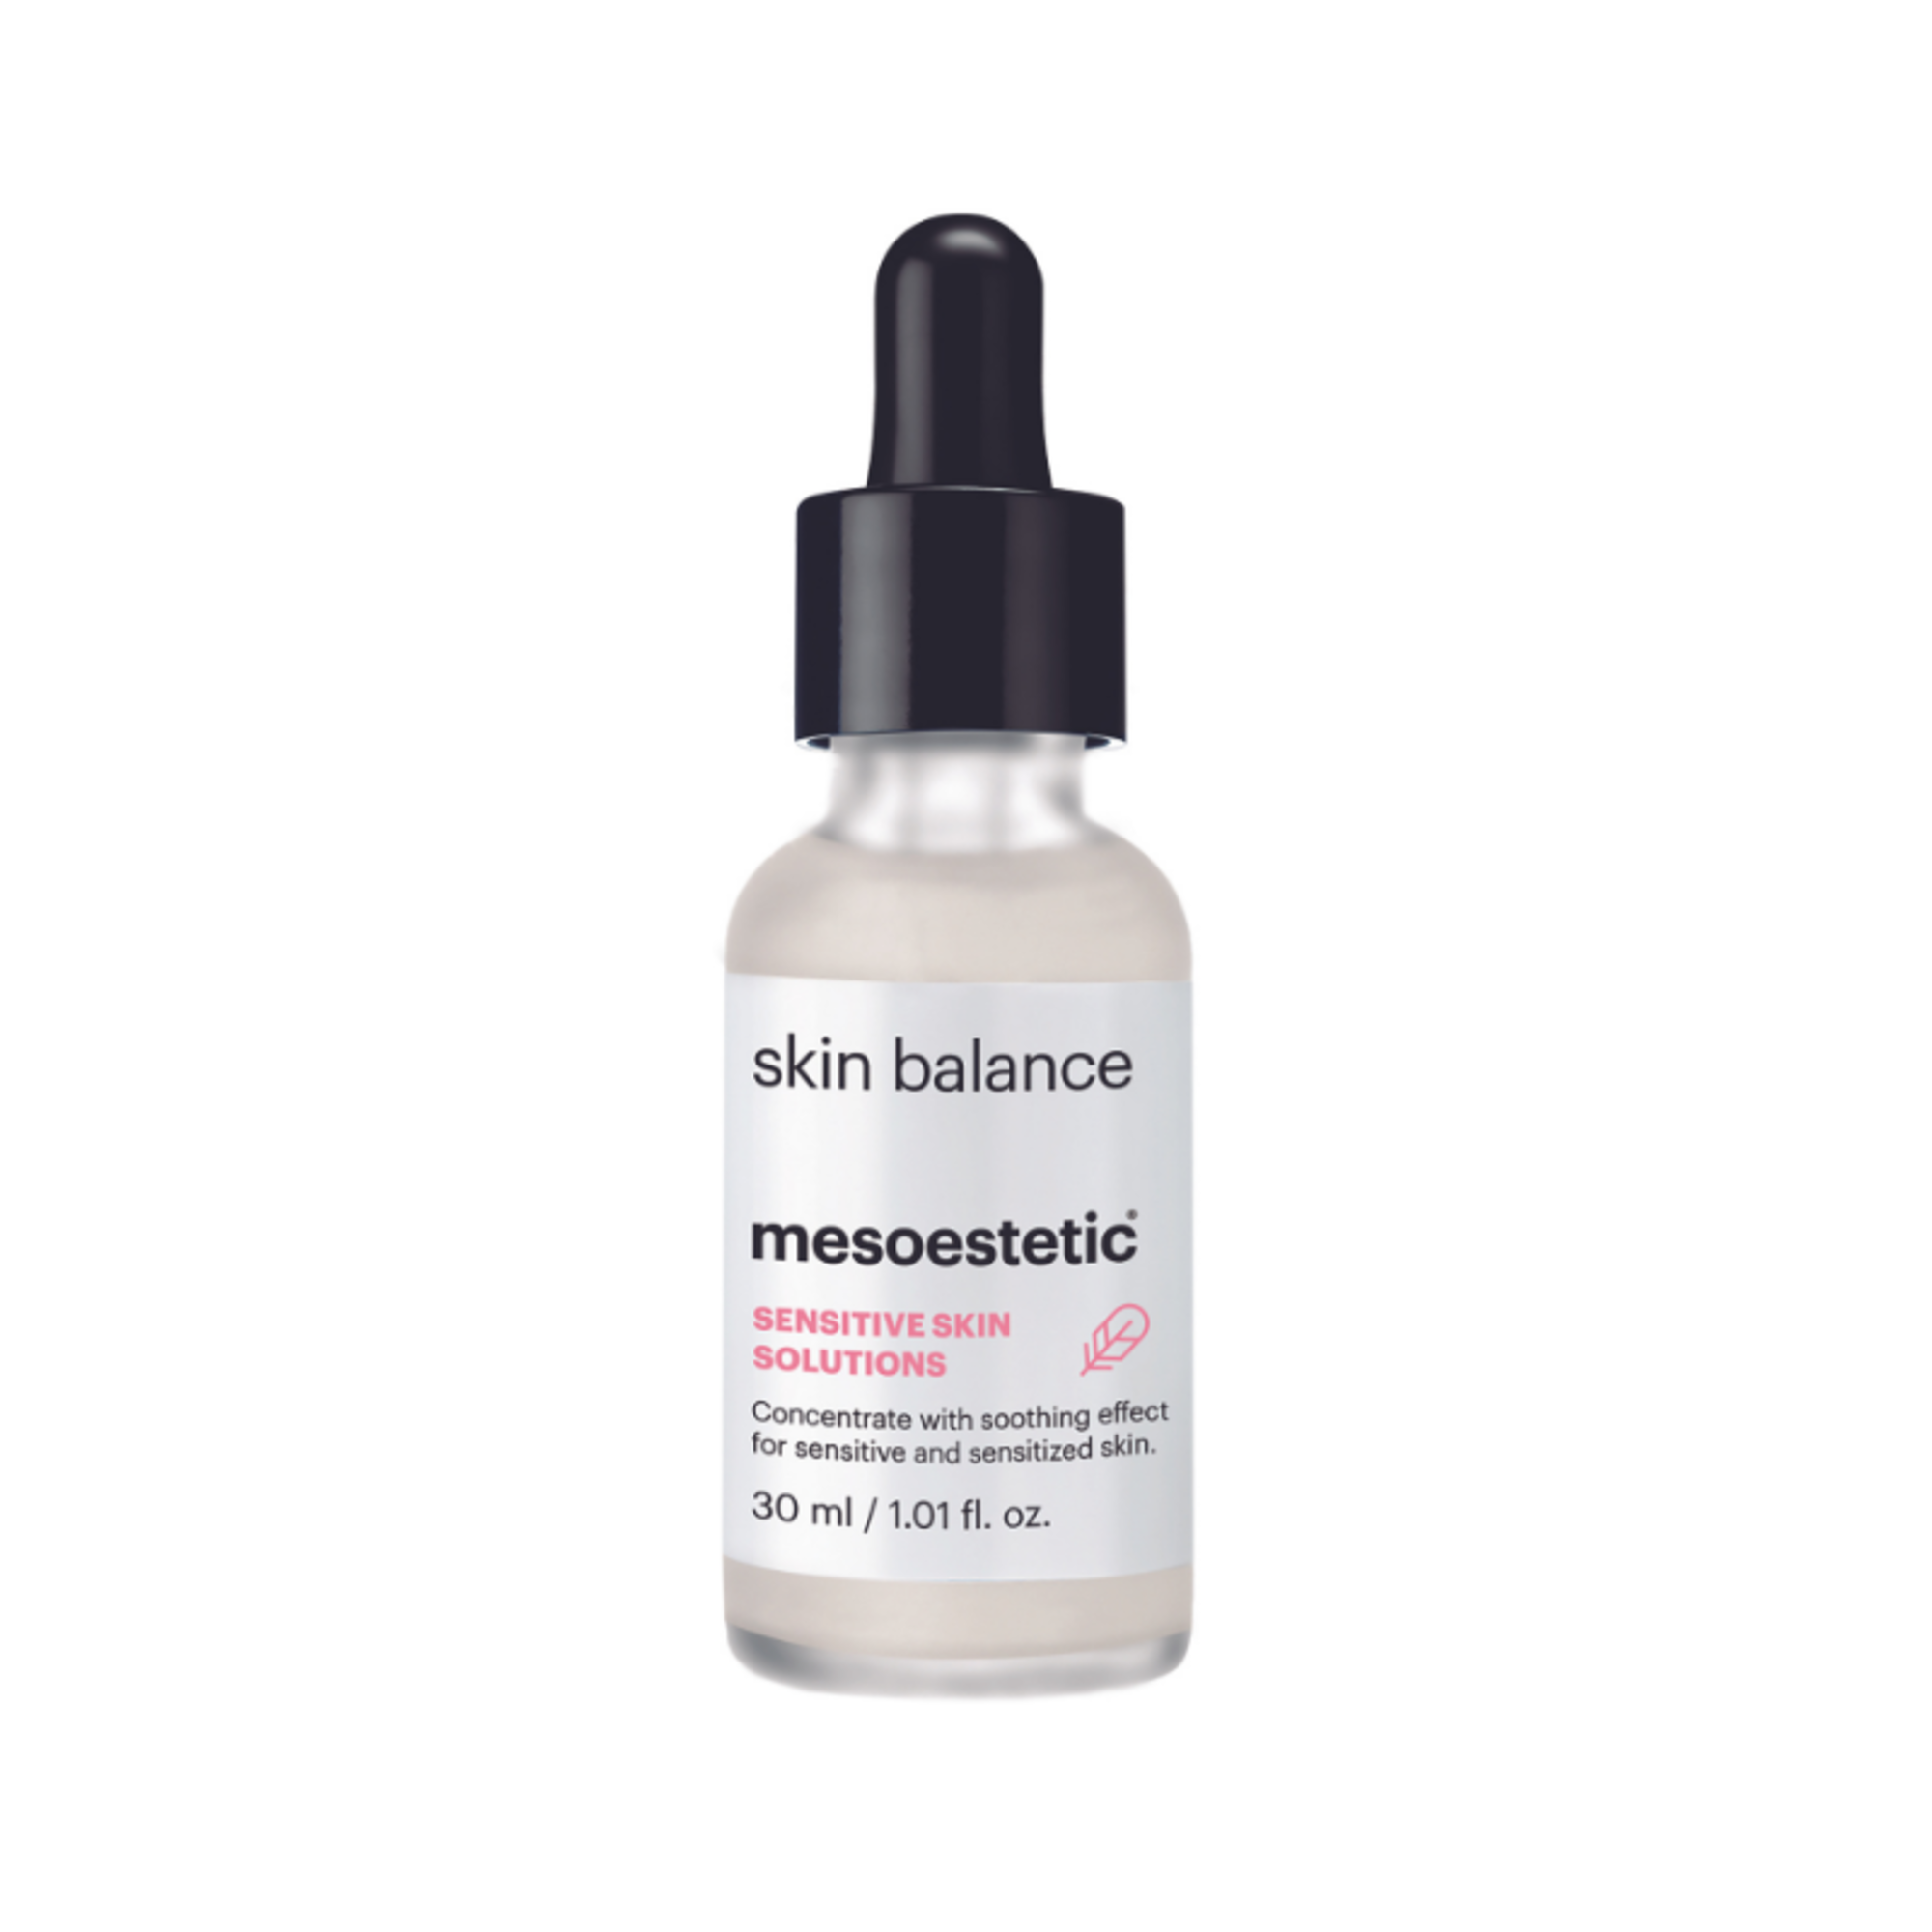 Billede af Mesoestetic skin balance 30 ml hos Staybeautiful